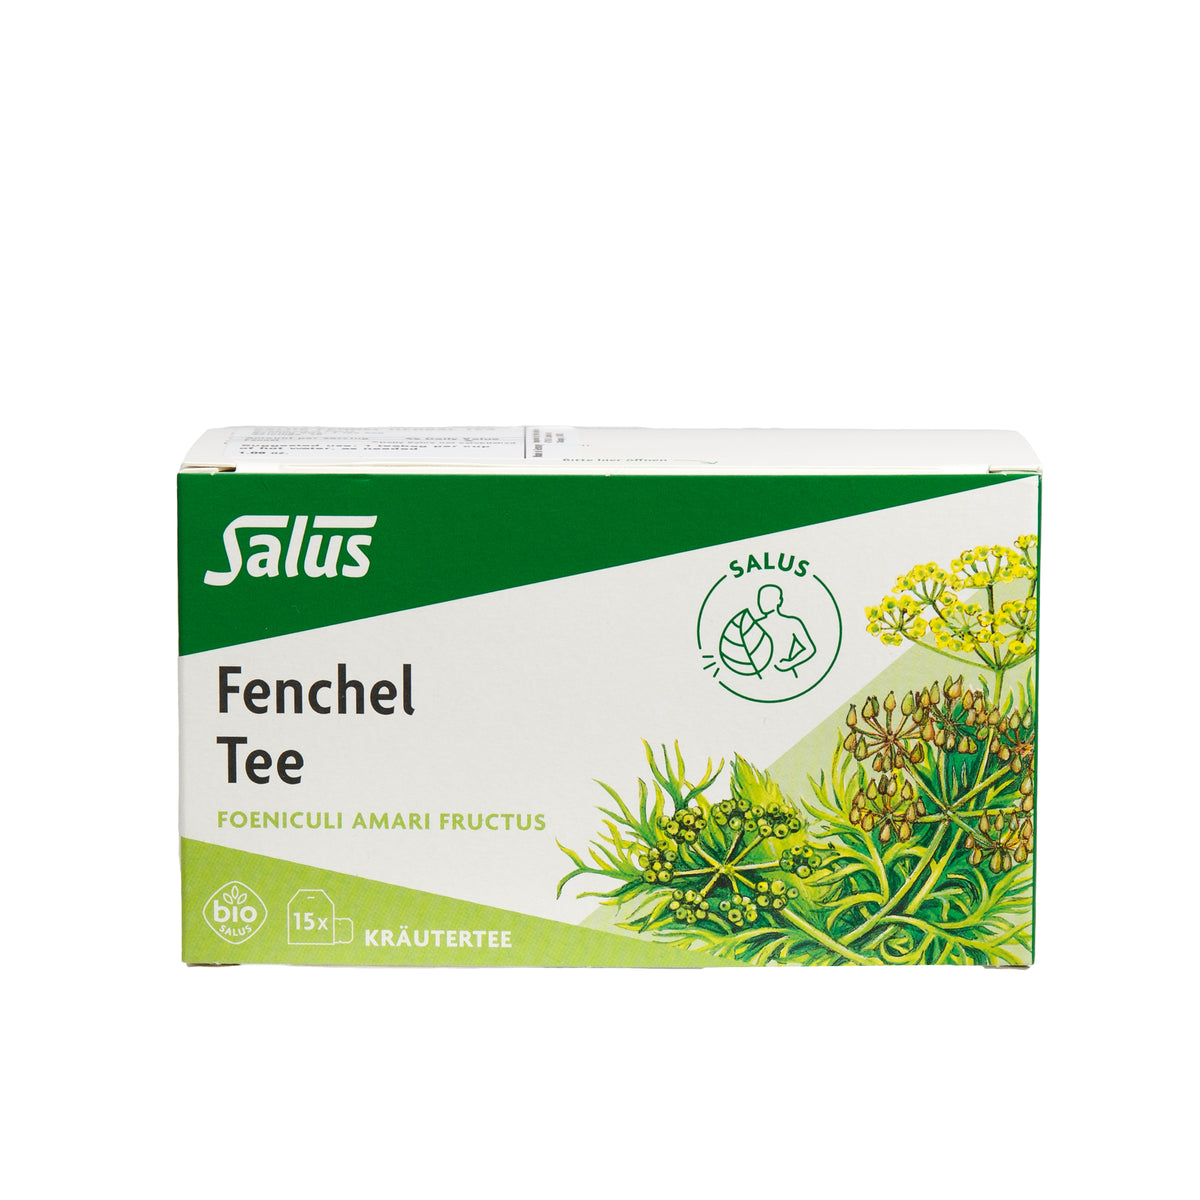 Primary Image of Fennel Herbal Tea